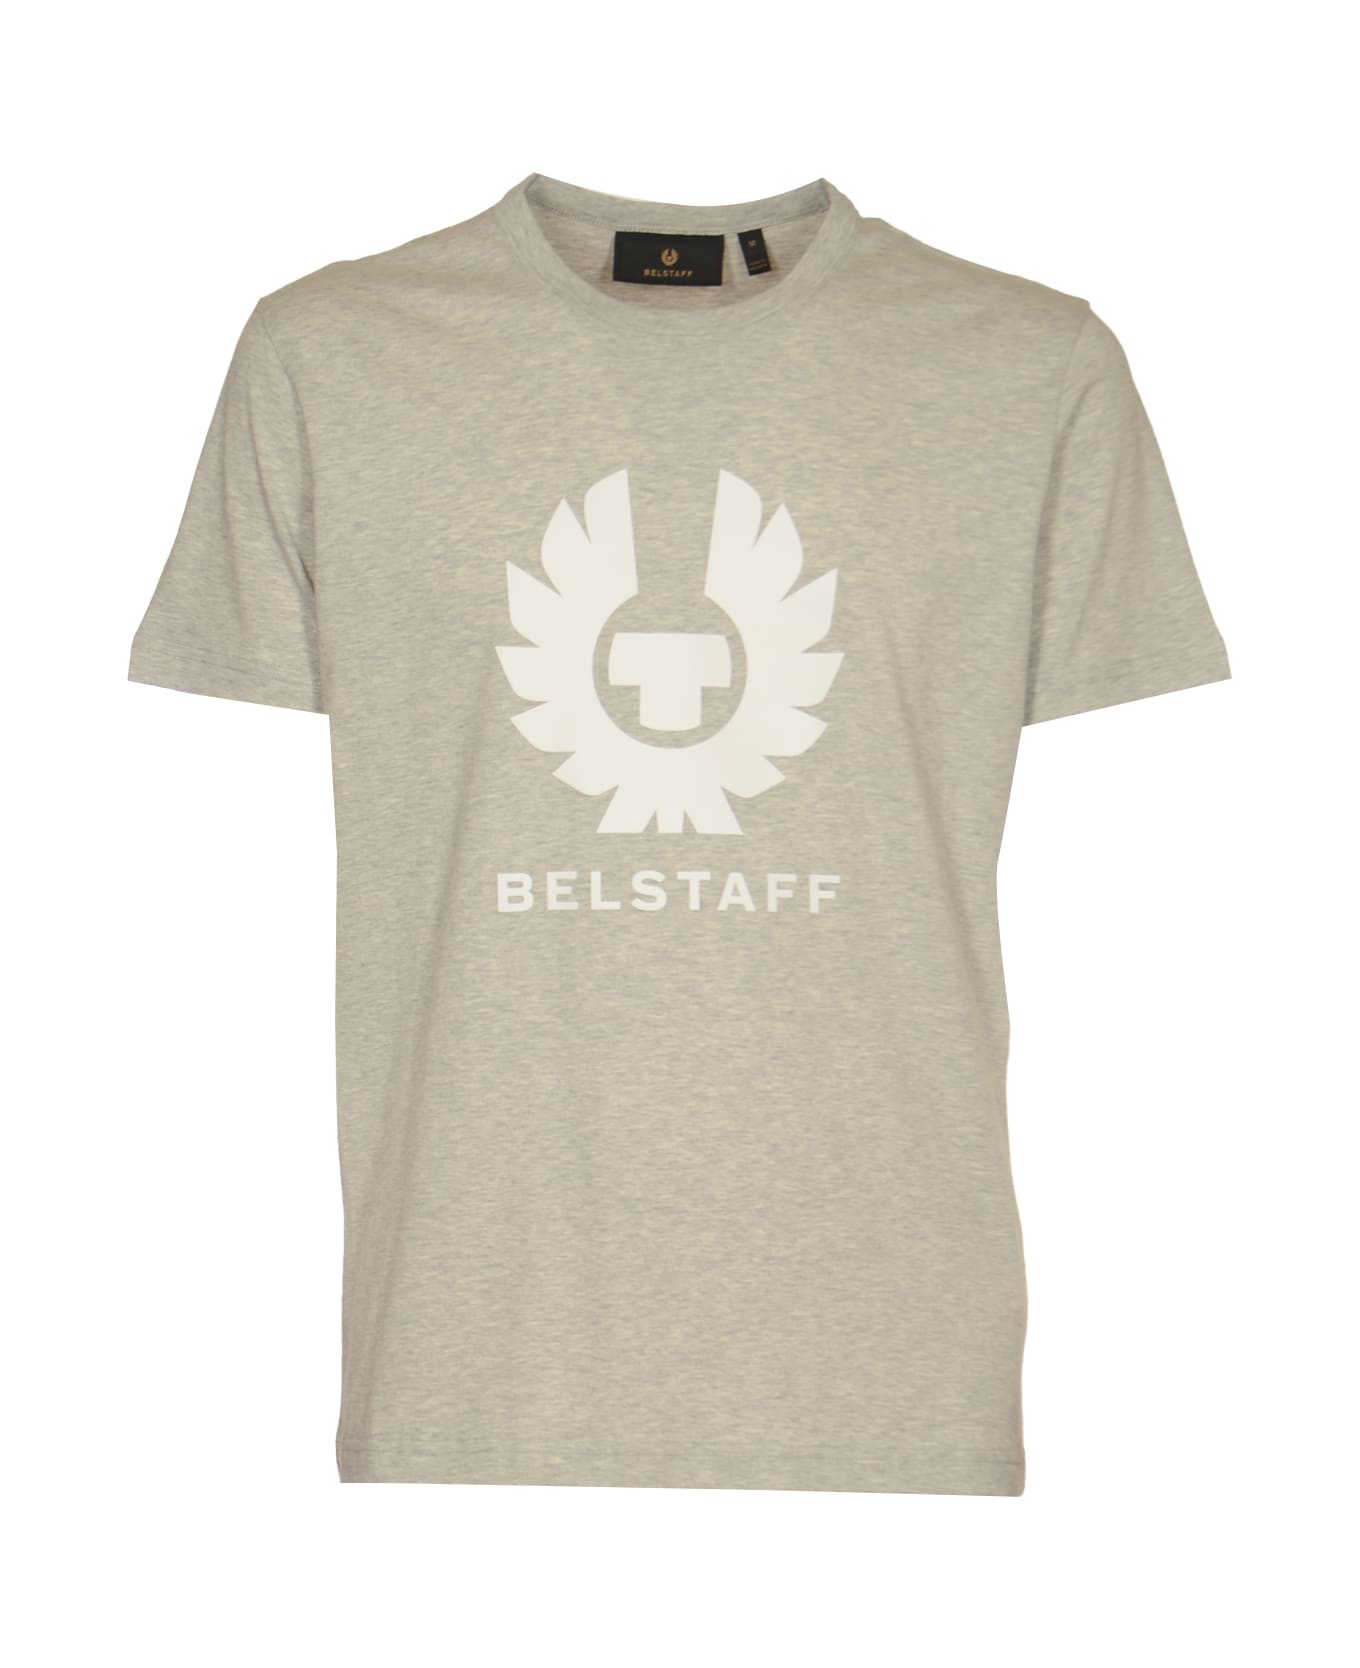 Belstaff Phoenix T-shirt - Old Silver